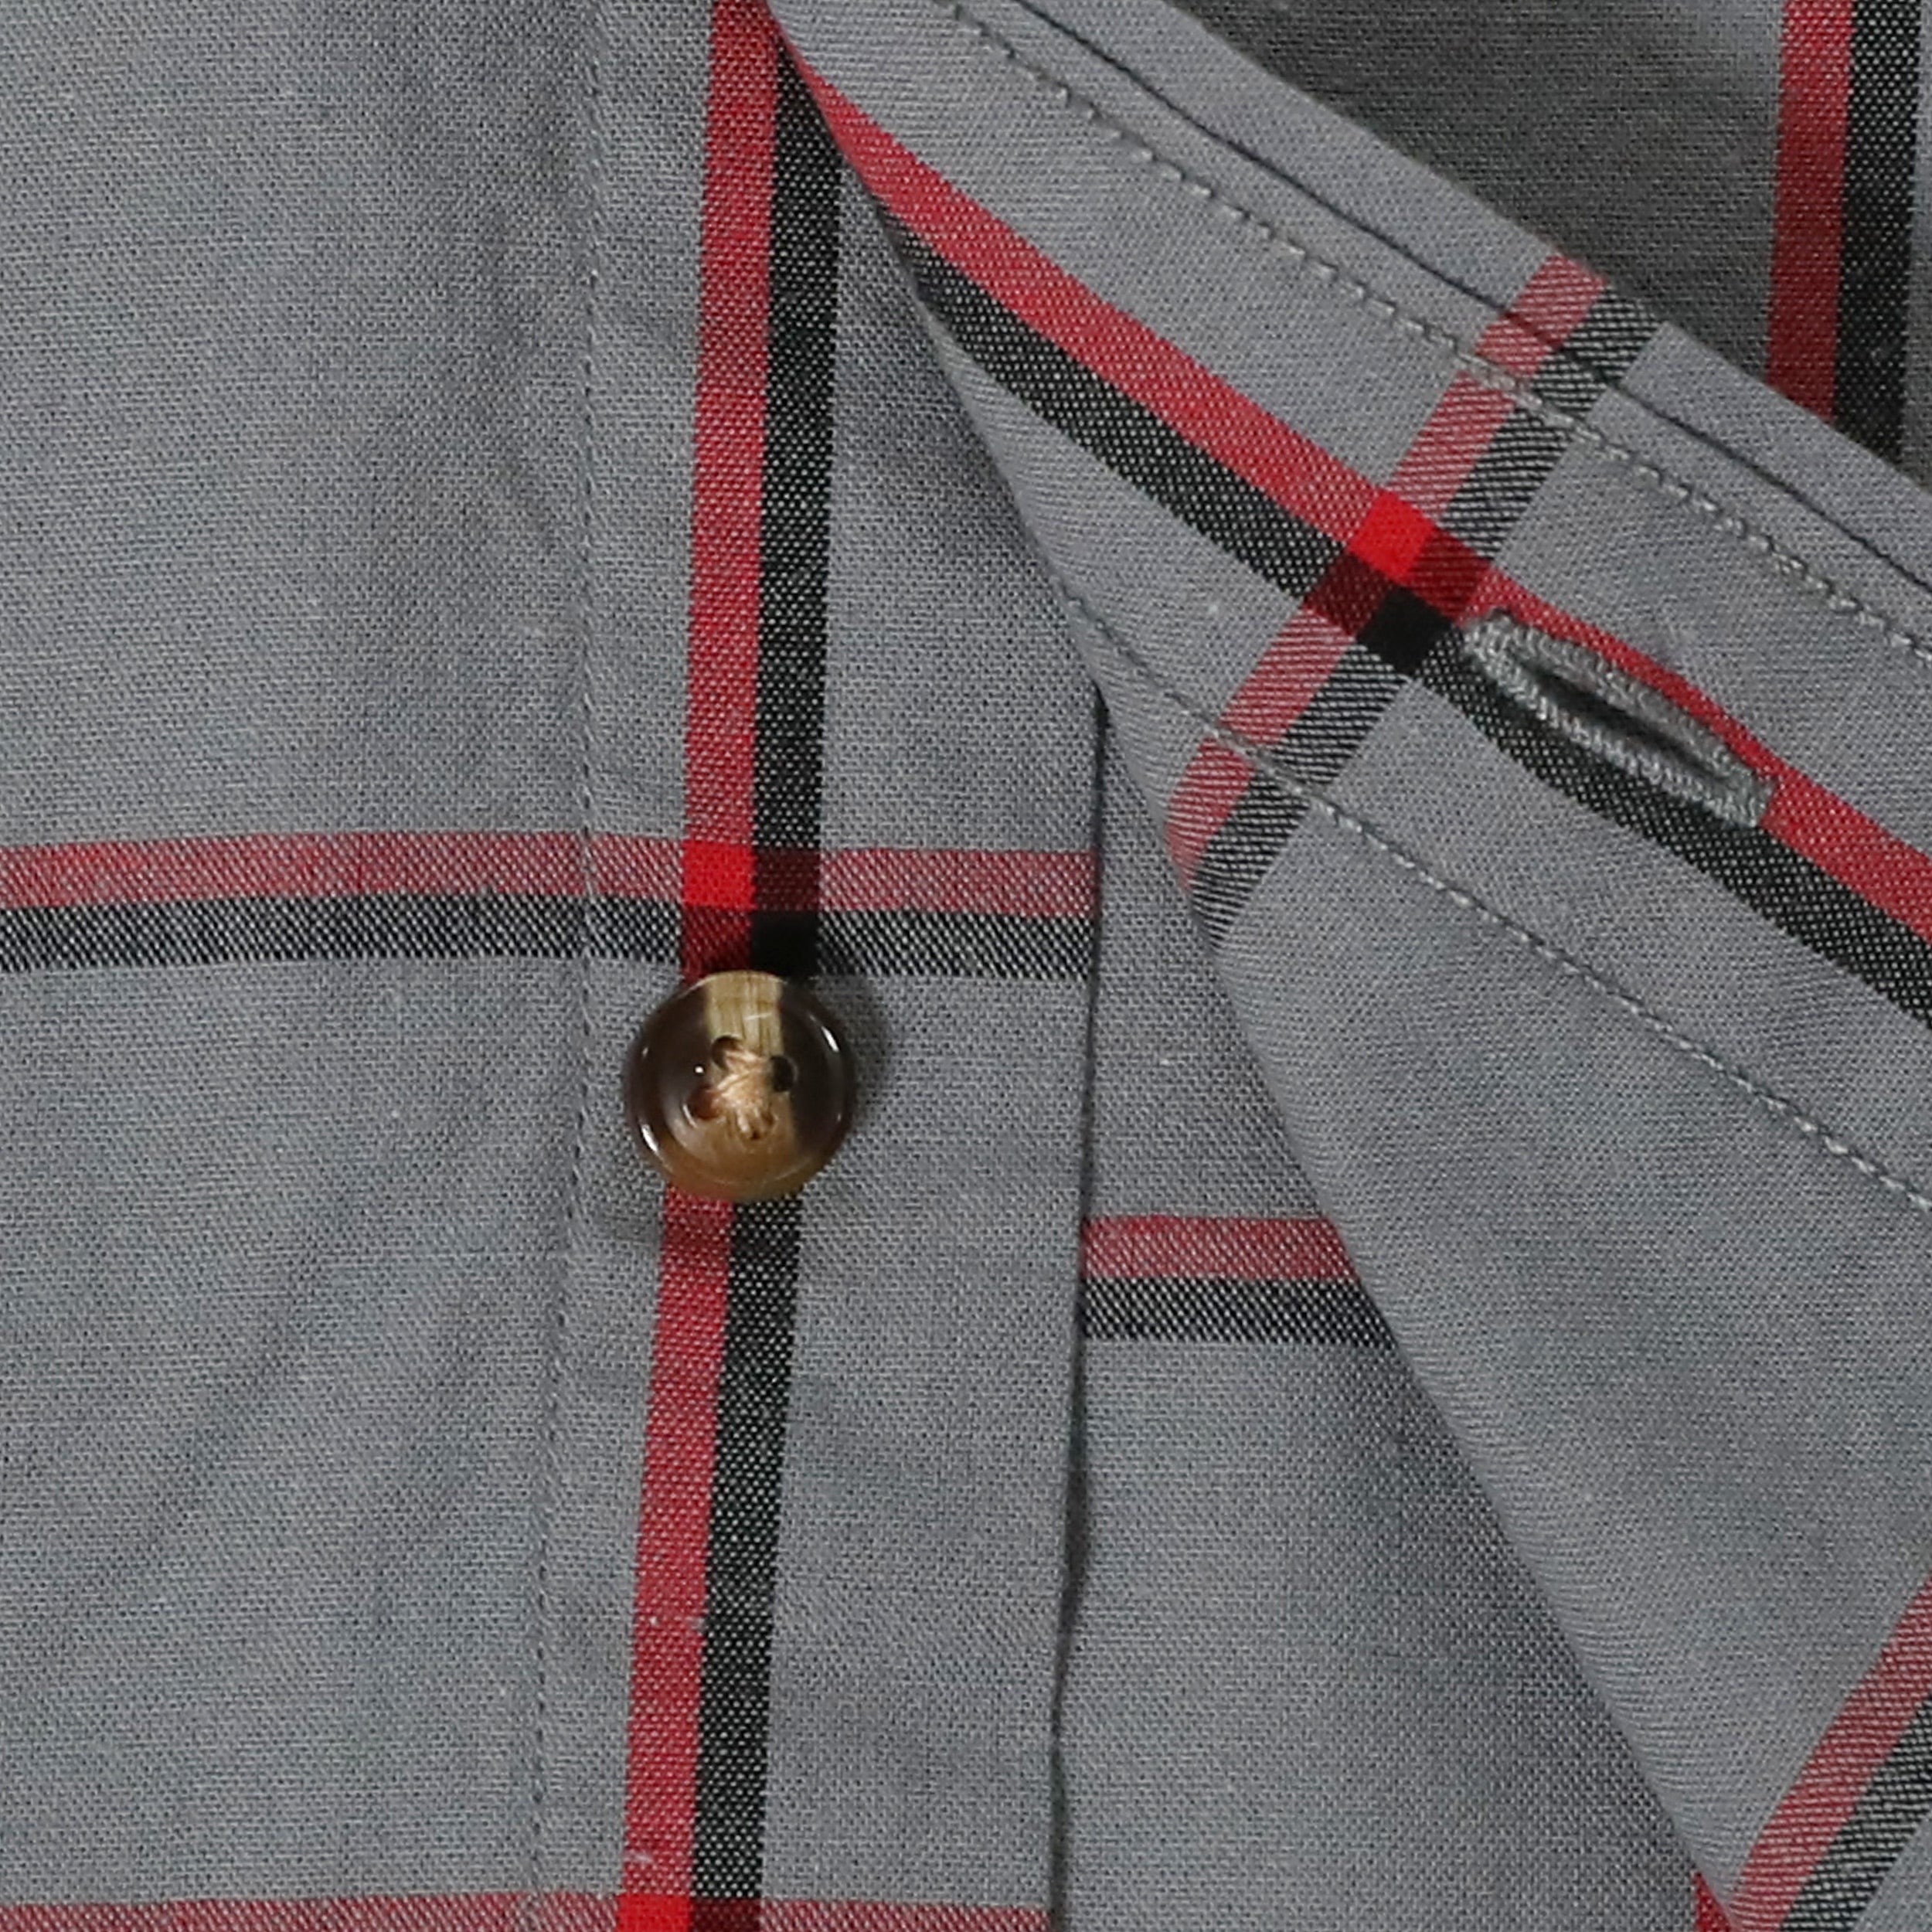 Dubinik® Short Sleeve Button Down Shirts 100% Cotton Plaid Casual Shirt with Pocket #0112